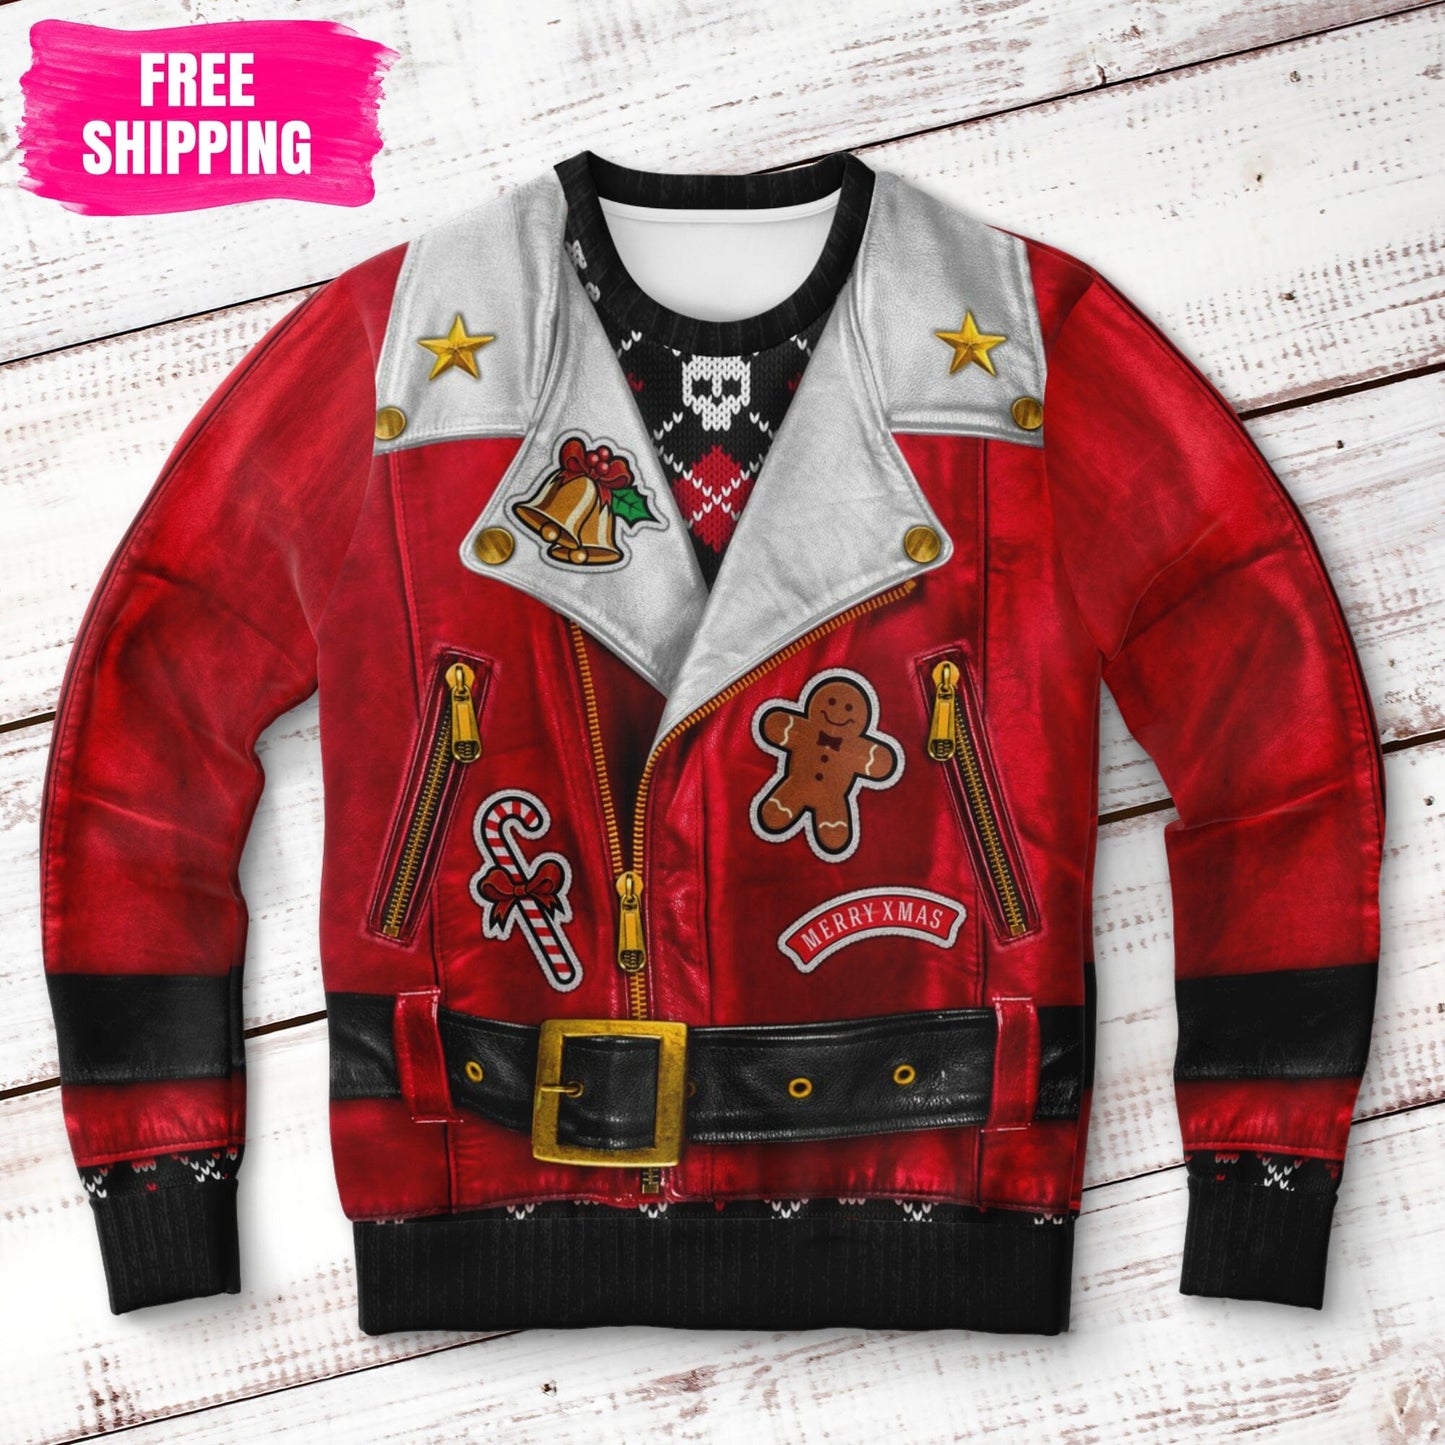 Sons of Santa Biker Jacket Ugly Christmas Sweatshirt Fashion Sweatshirt - AOP Subliminator 